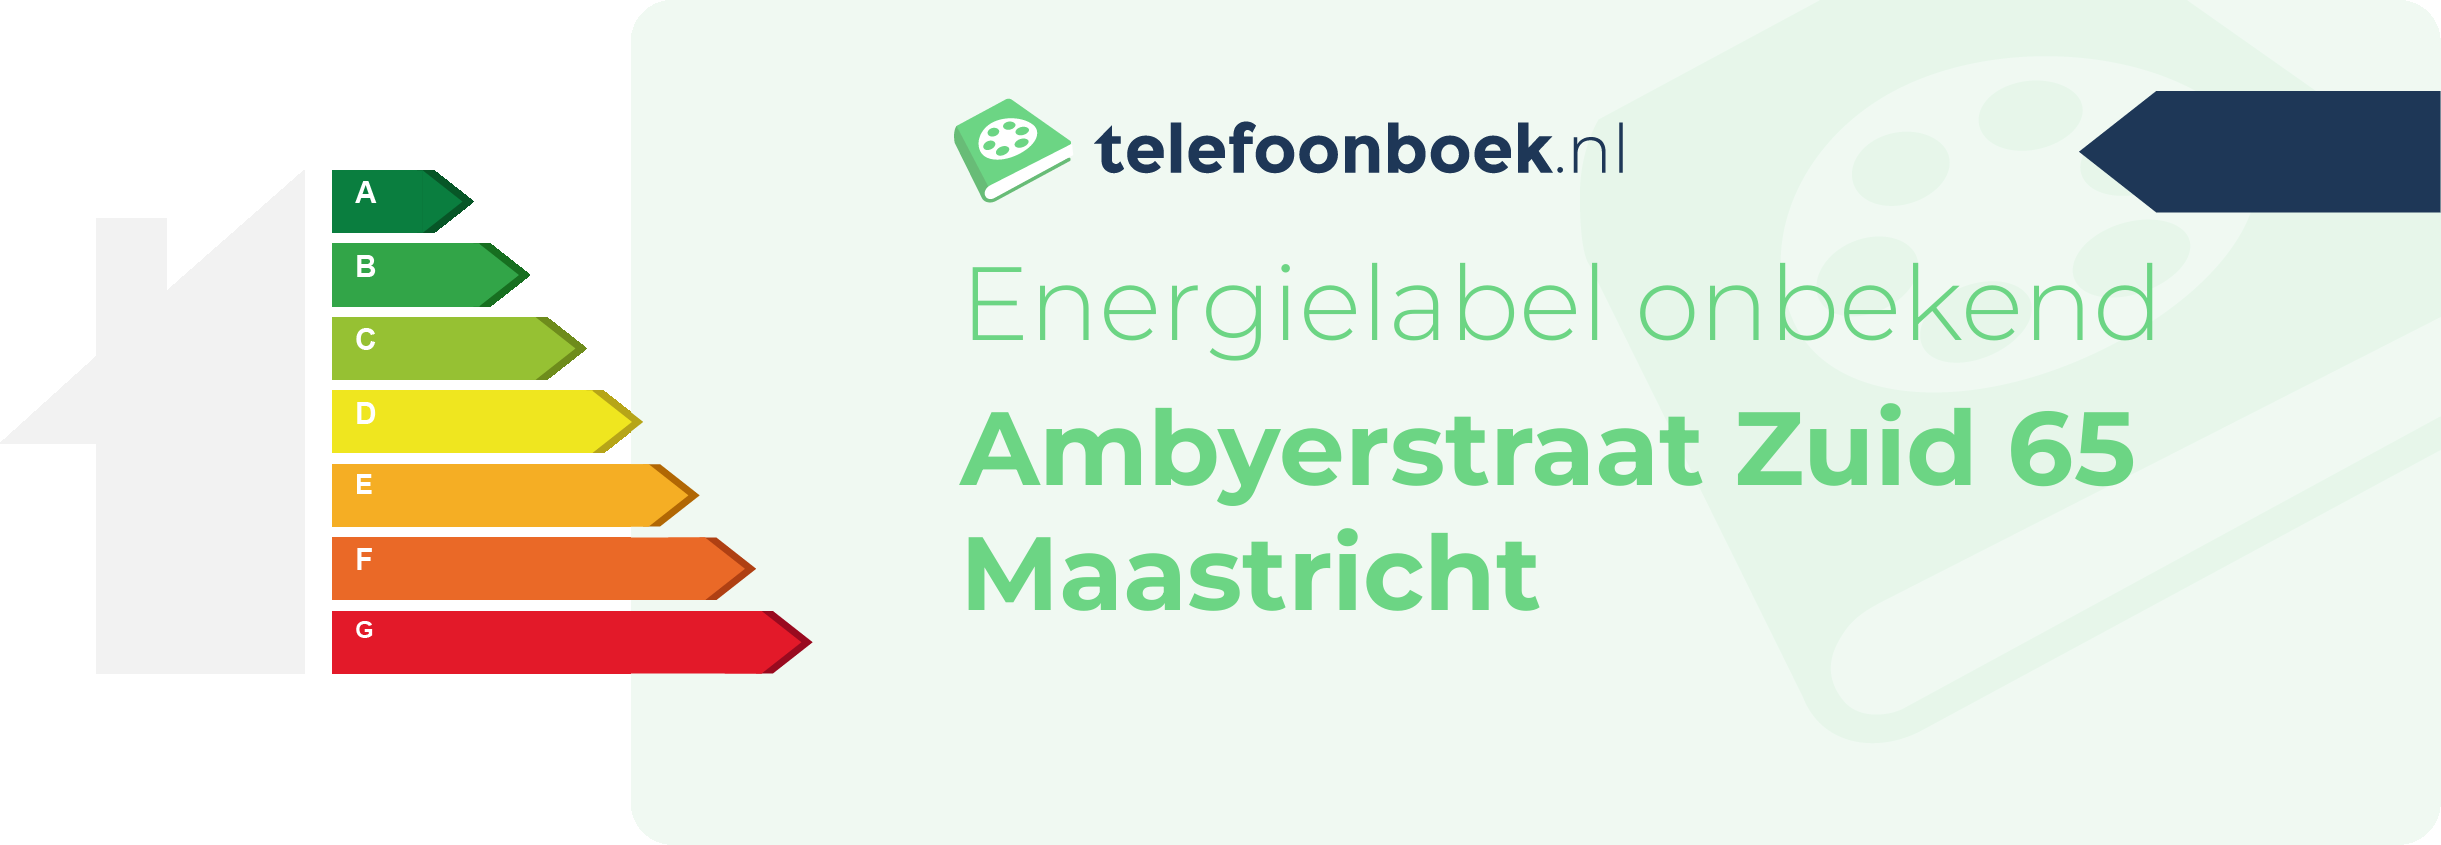 Energielabel Ambyerstraat Zuid 65 Maastricht